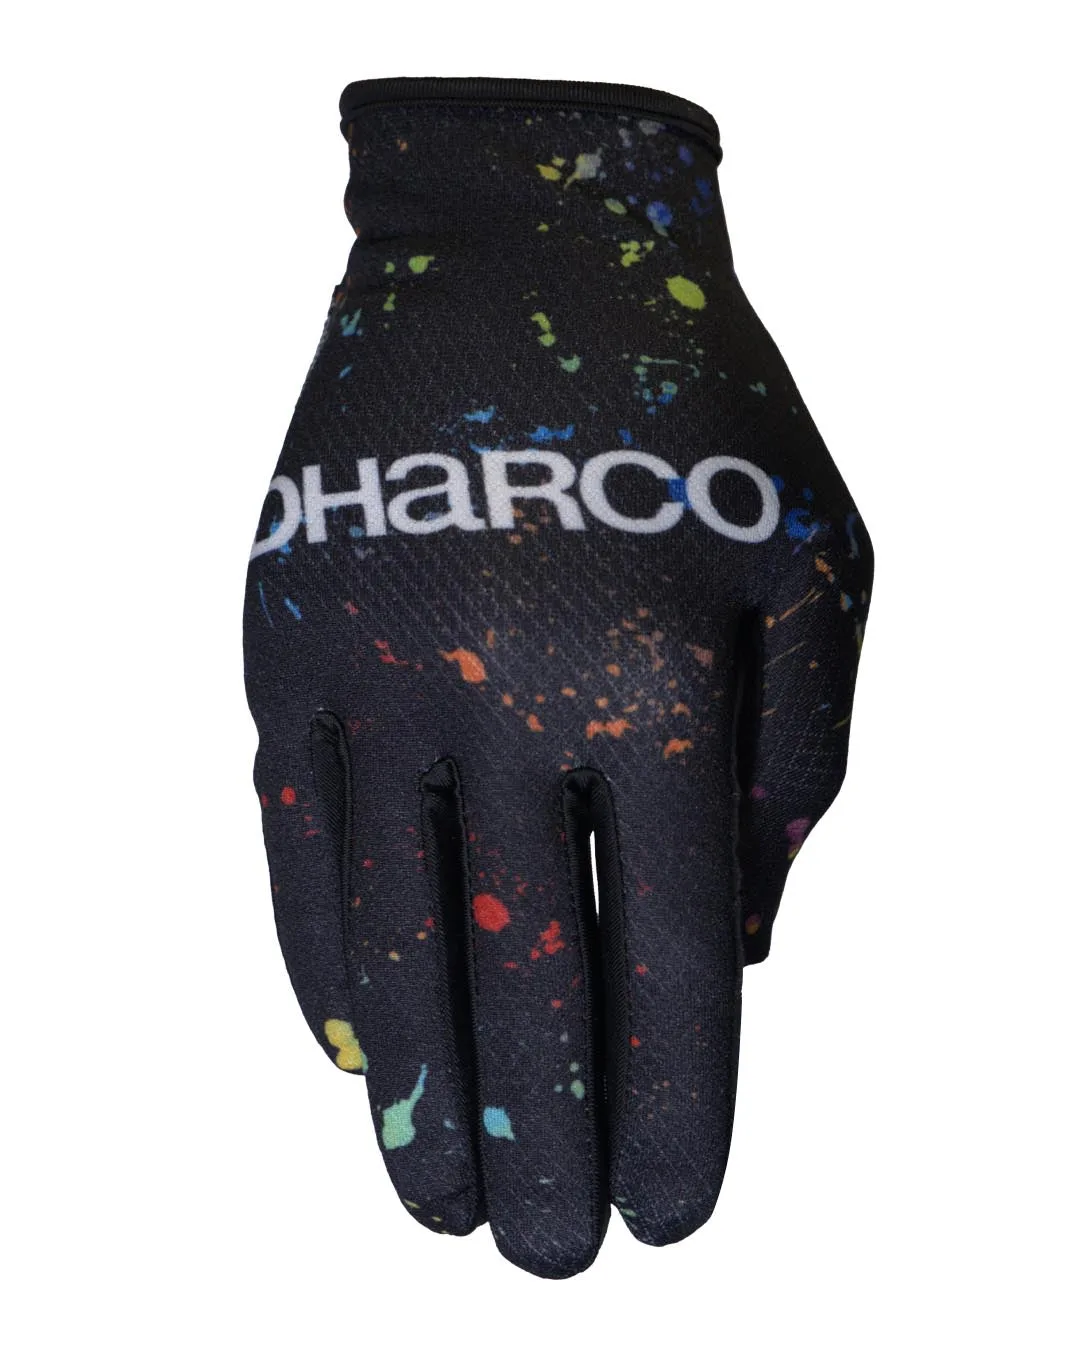 Dharco - Mens Race Glove - Supernova - Sort,Grøn,Blå,Rød,Orange XL